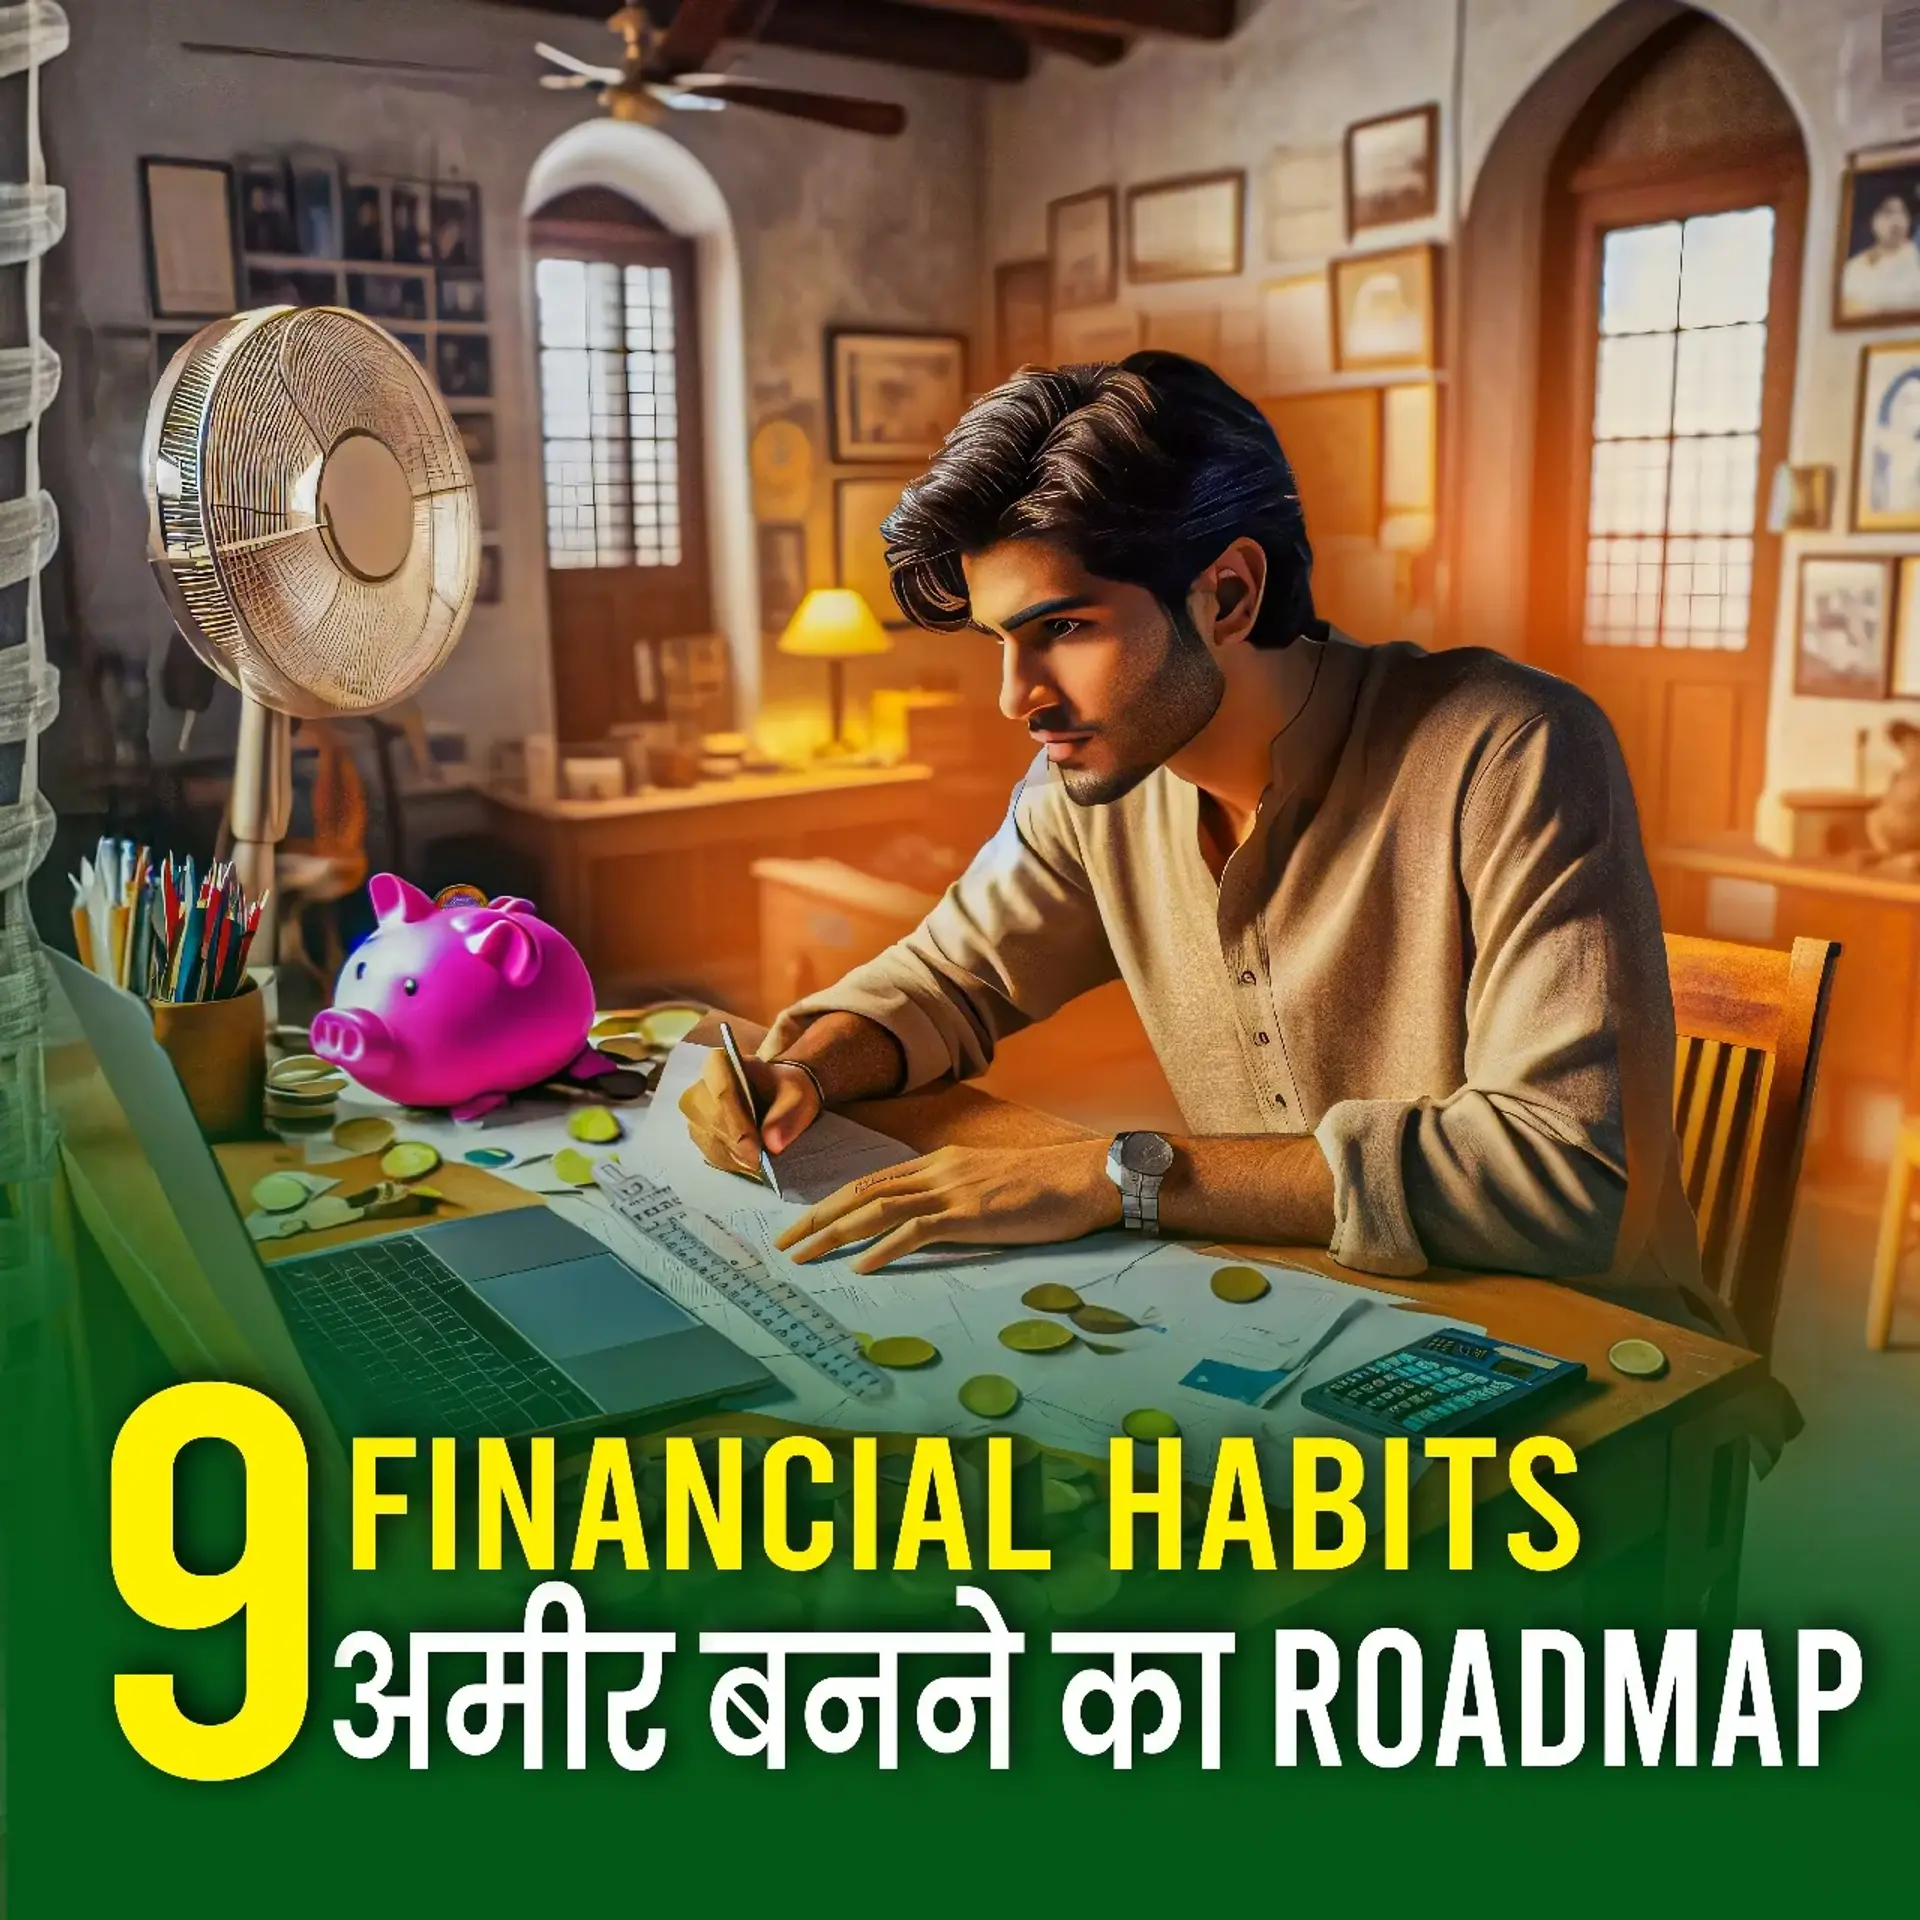 9 Financial Habits: अमीर बनने का Roadmap | 